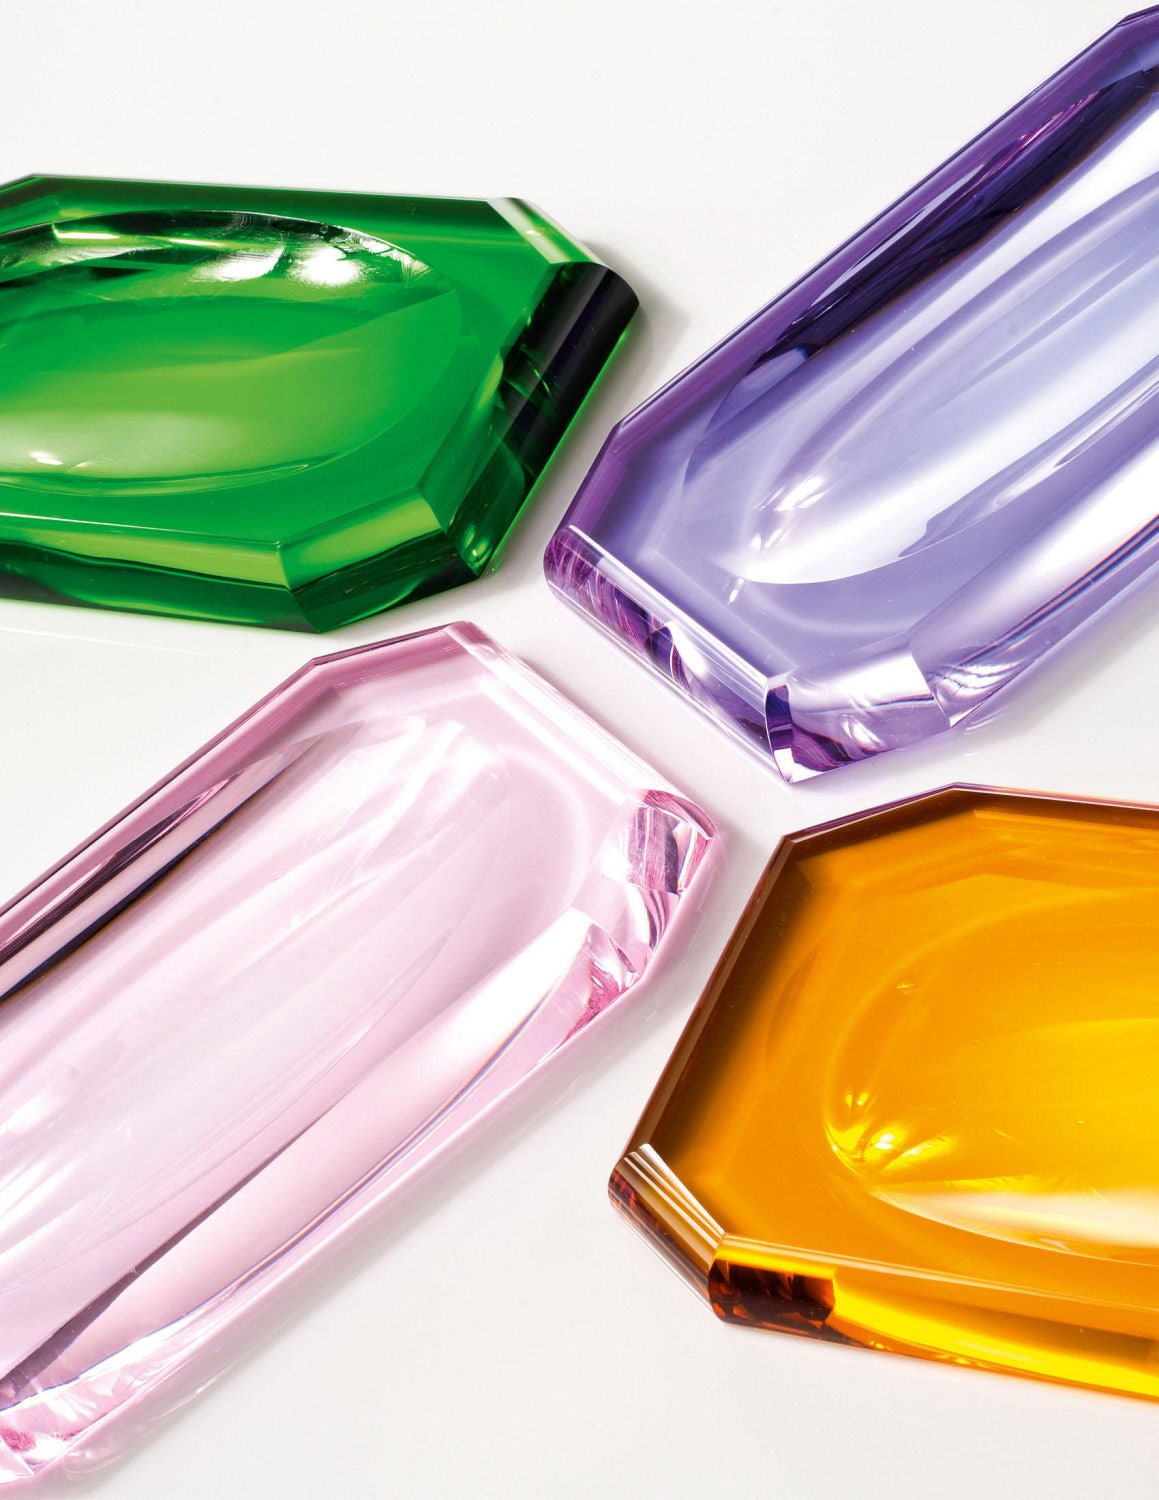 Luxury Shiny Gold Crystal Liquid Soap Glass Dispenser | English Green - |VESIMI Design| Luxury Bathrooms and Home Decor